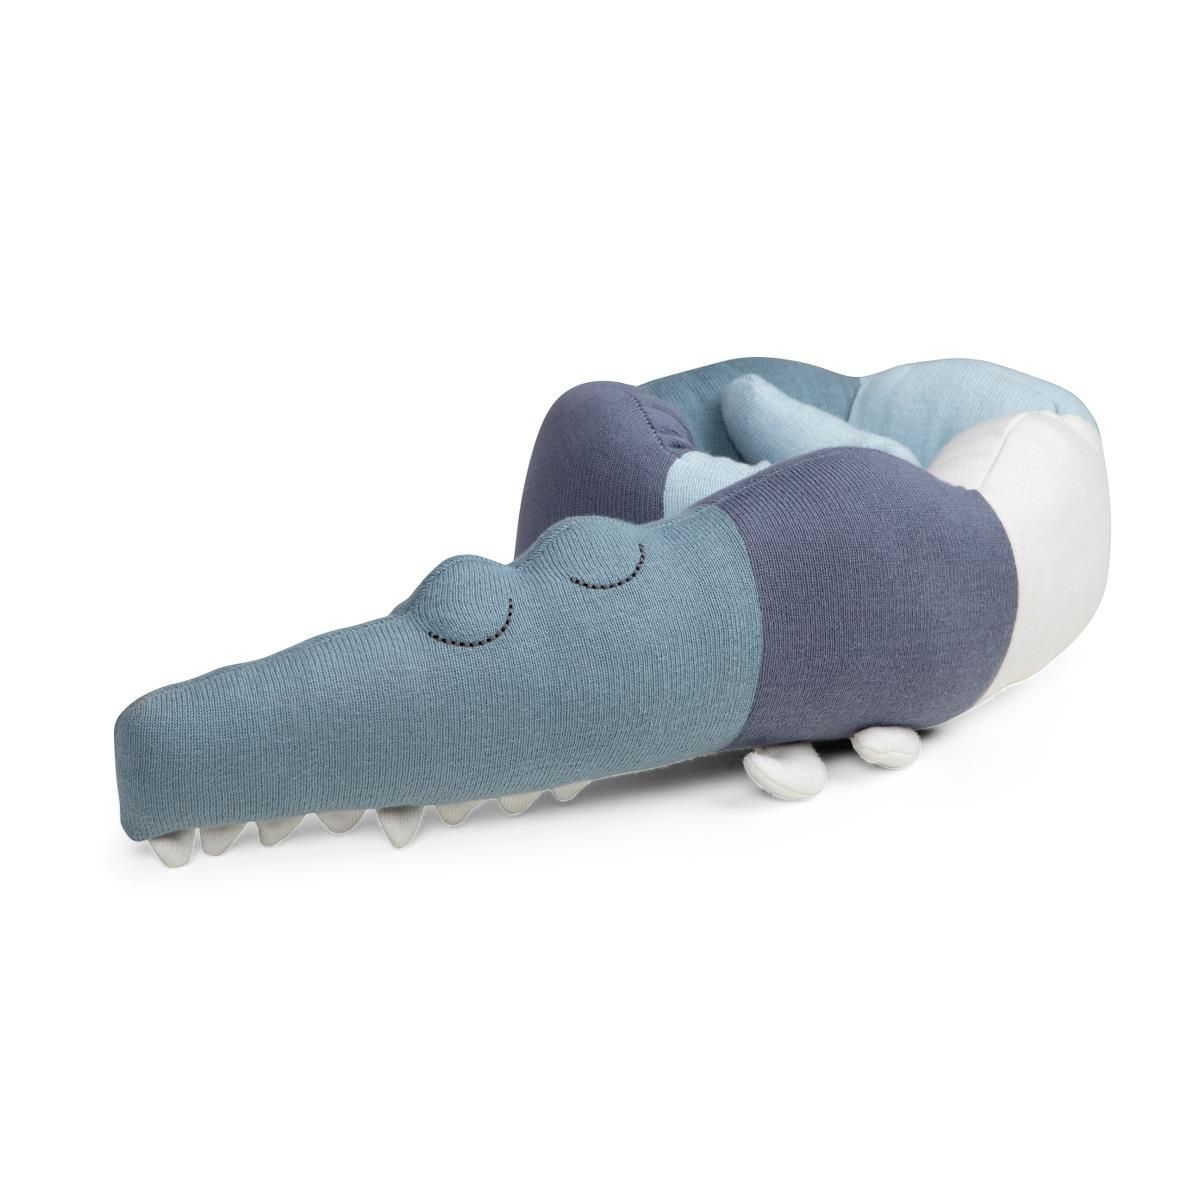 Подушка-игрушка Sebra Крокодил, голубой, мини подушка массажная sm 329x голубой